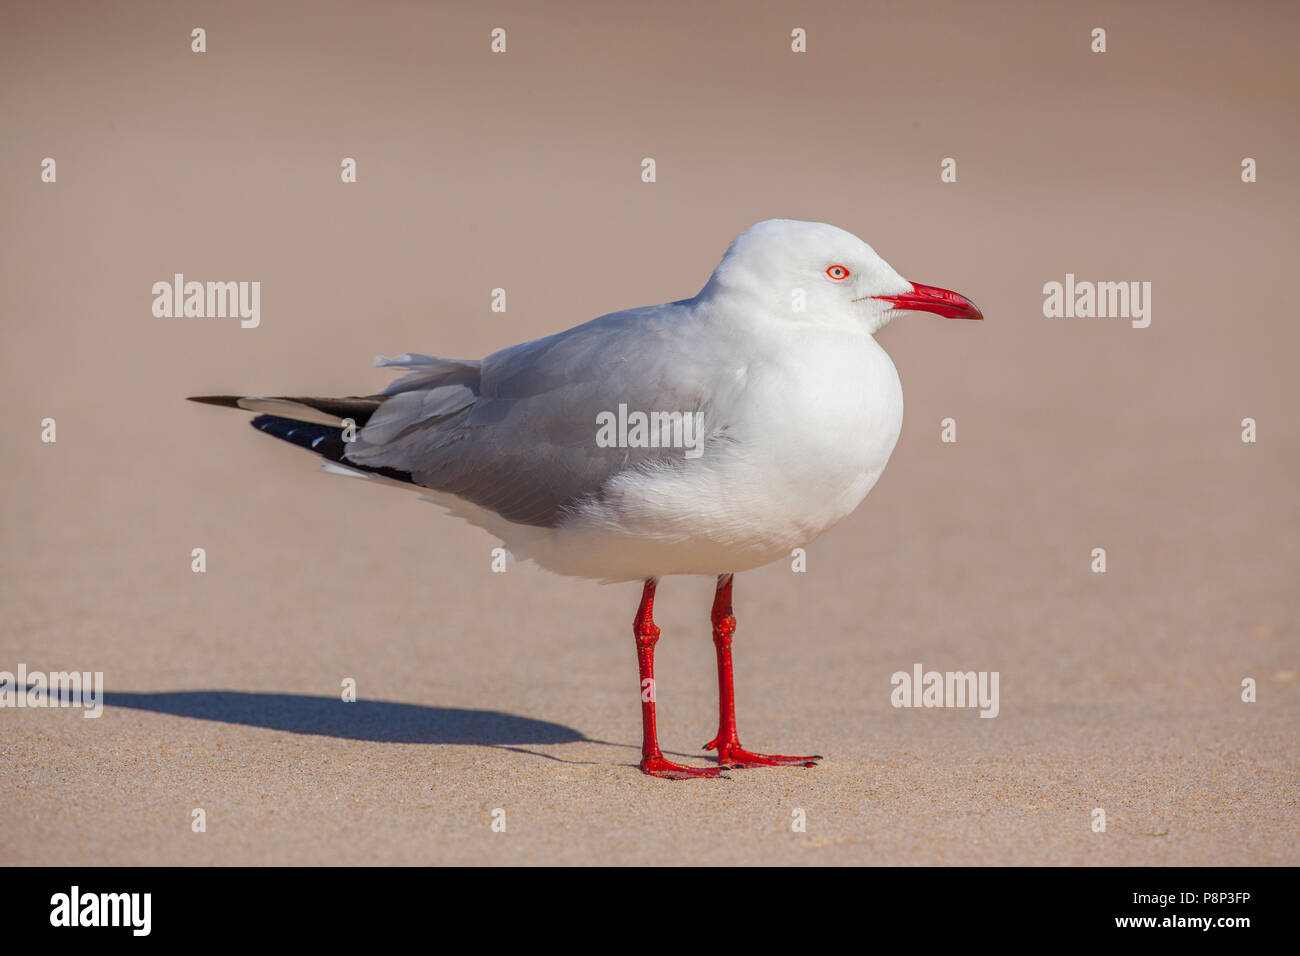 Silver Gull (Chroicocephalus novaehollandiae) standing on beach Stock Photo